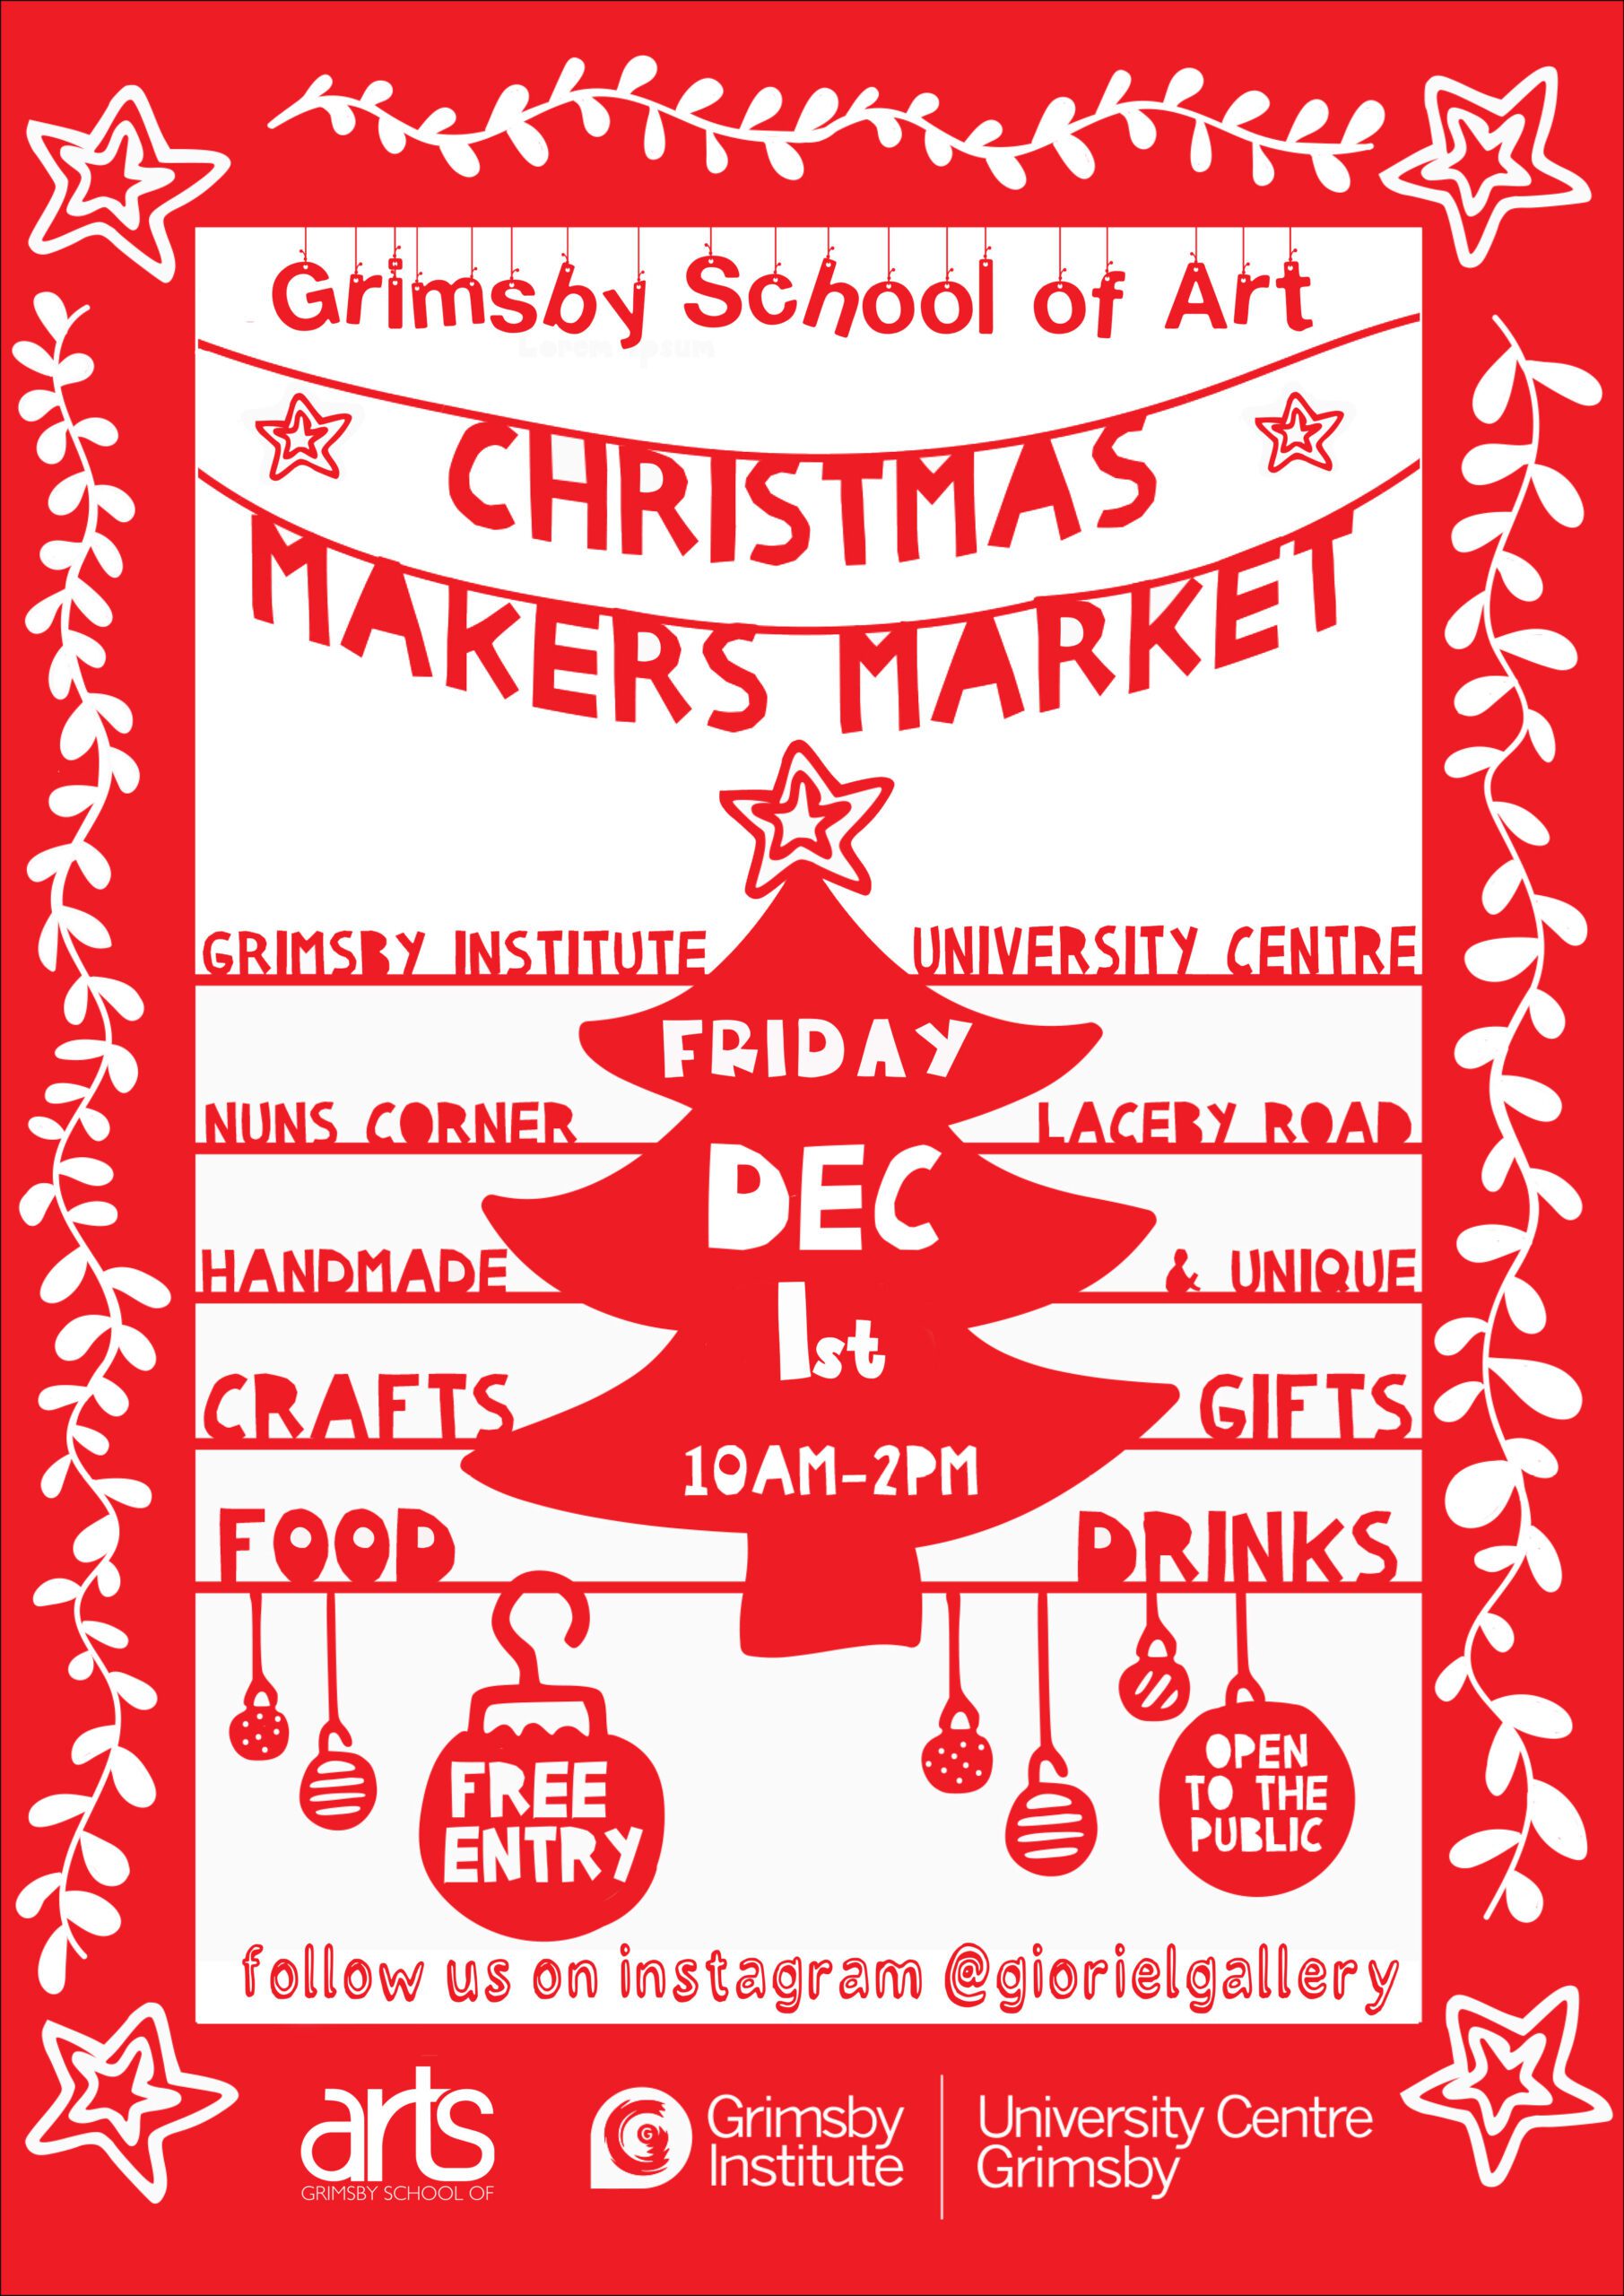 Our popular Christmas Maker’s Market